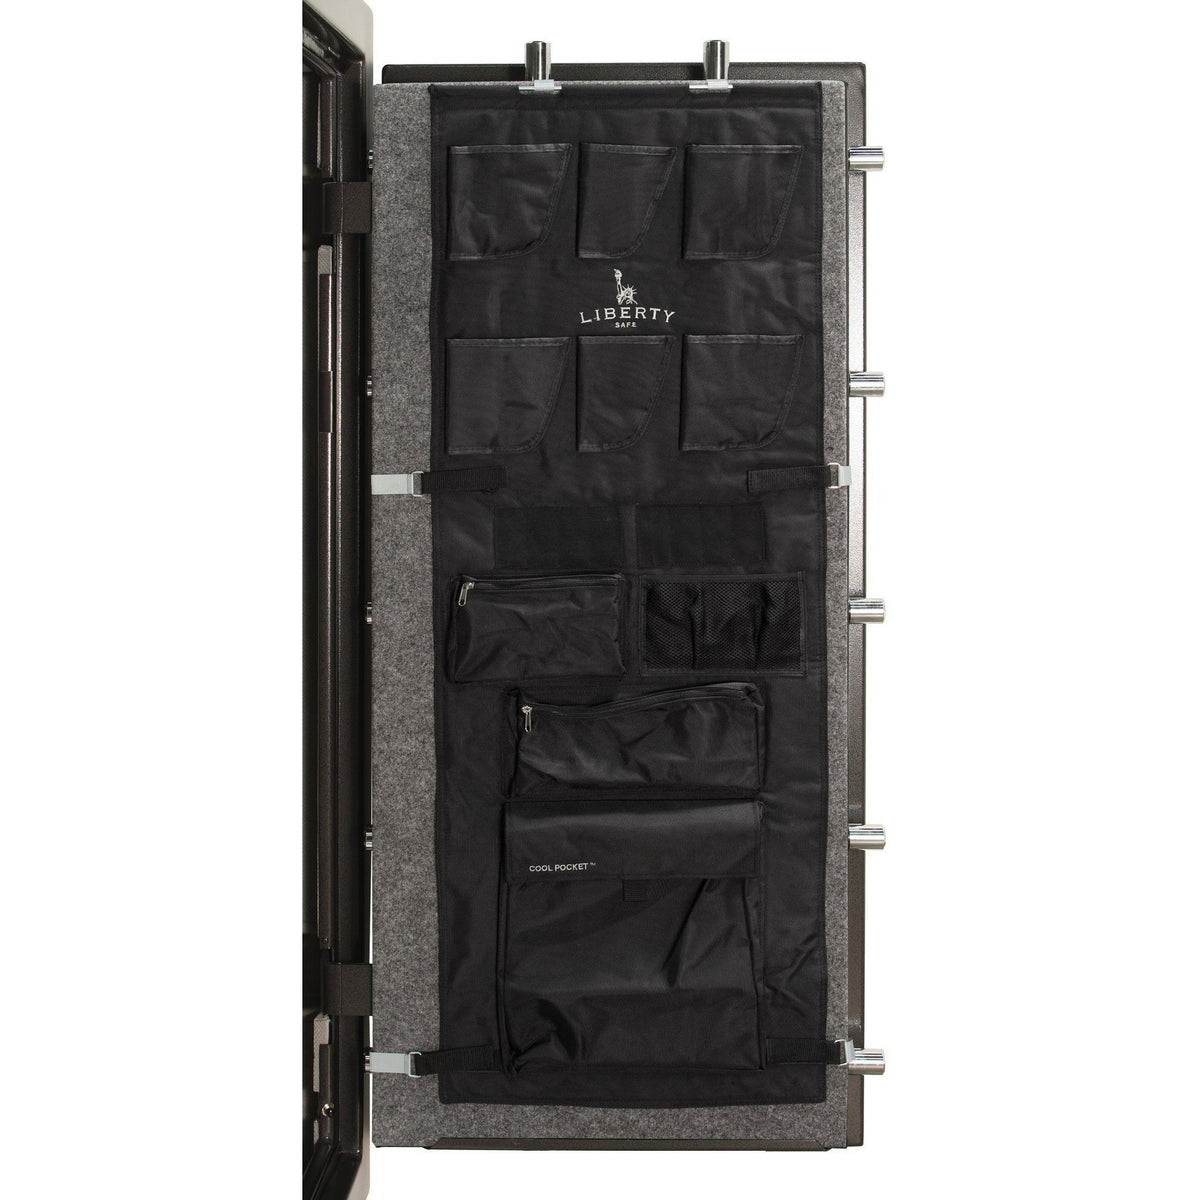 Accessory - Storage - Door Panel - 20-23-25 size safes | Liberty Safe Norcal.